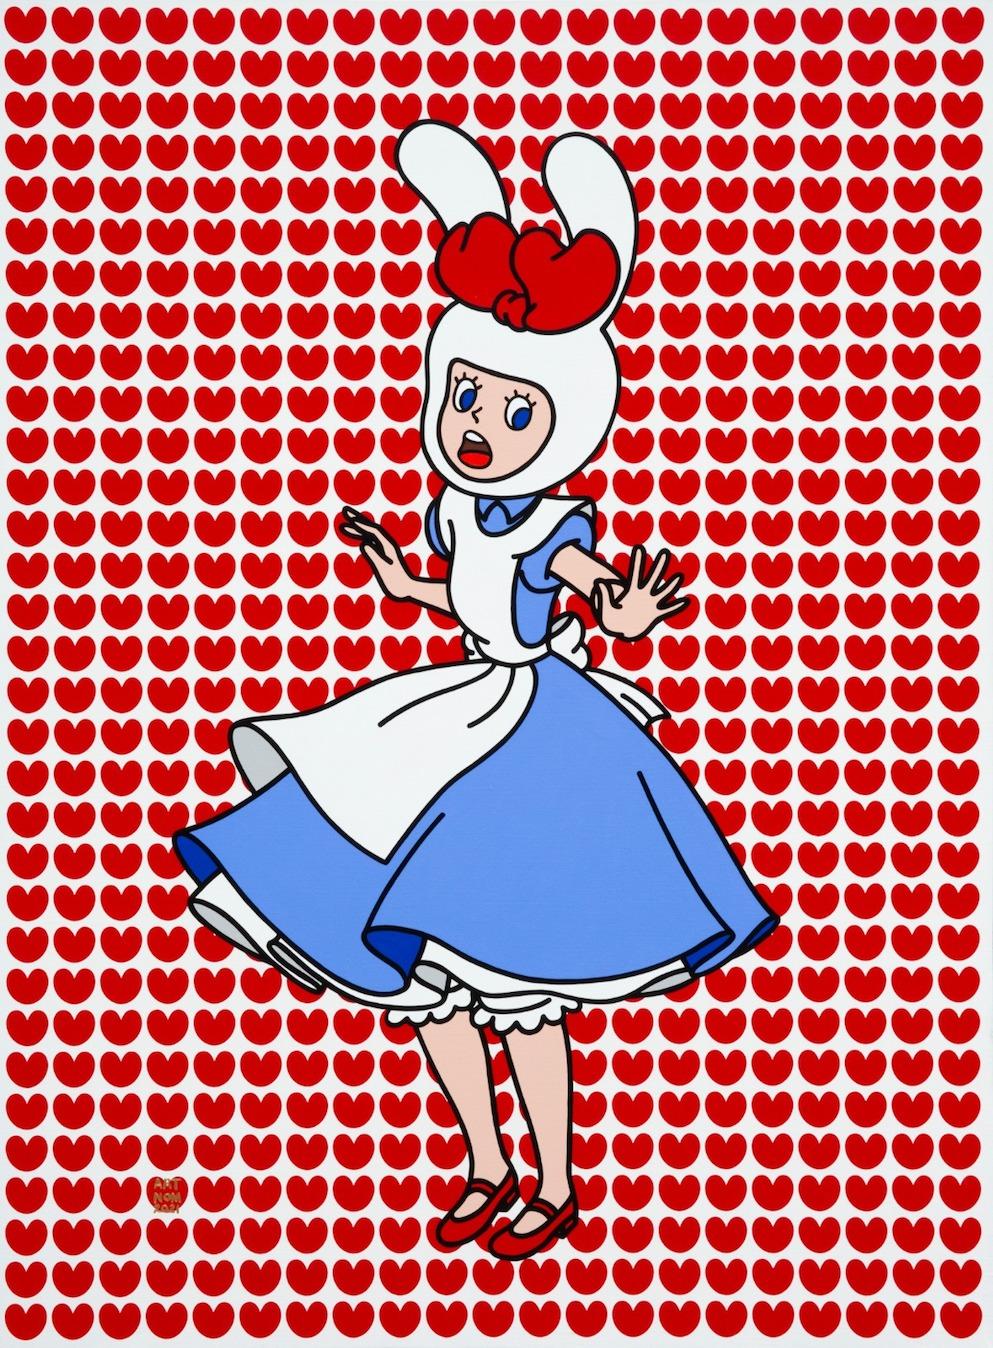 Pop Art Painting  Gazi's Adventures in Wonderland - Red Heart